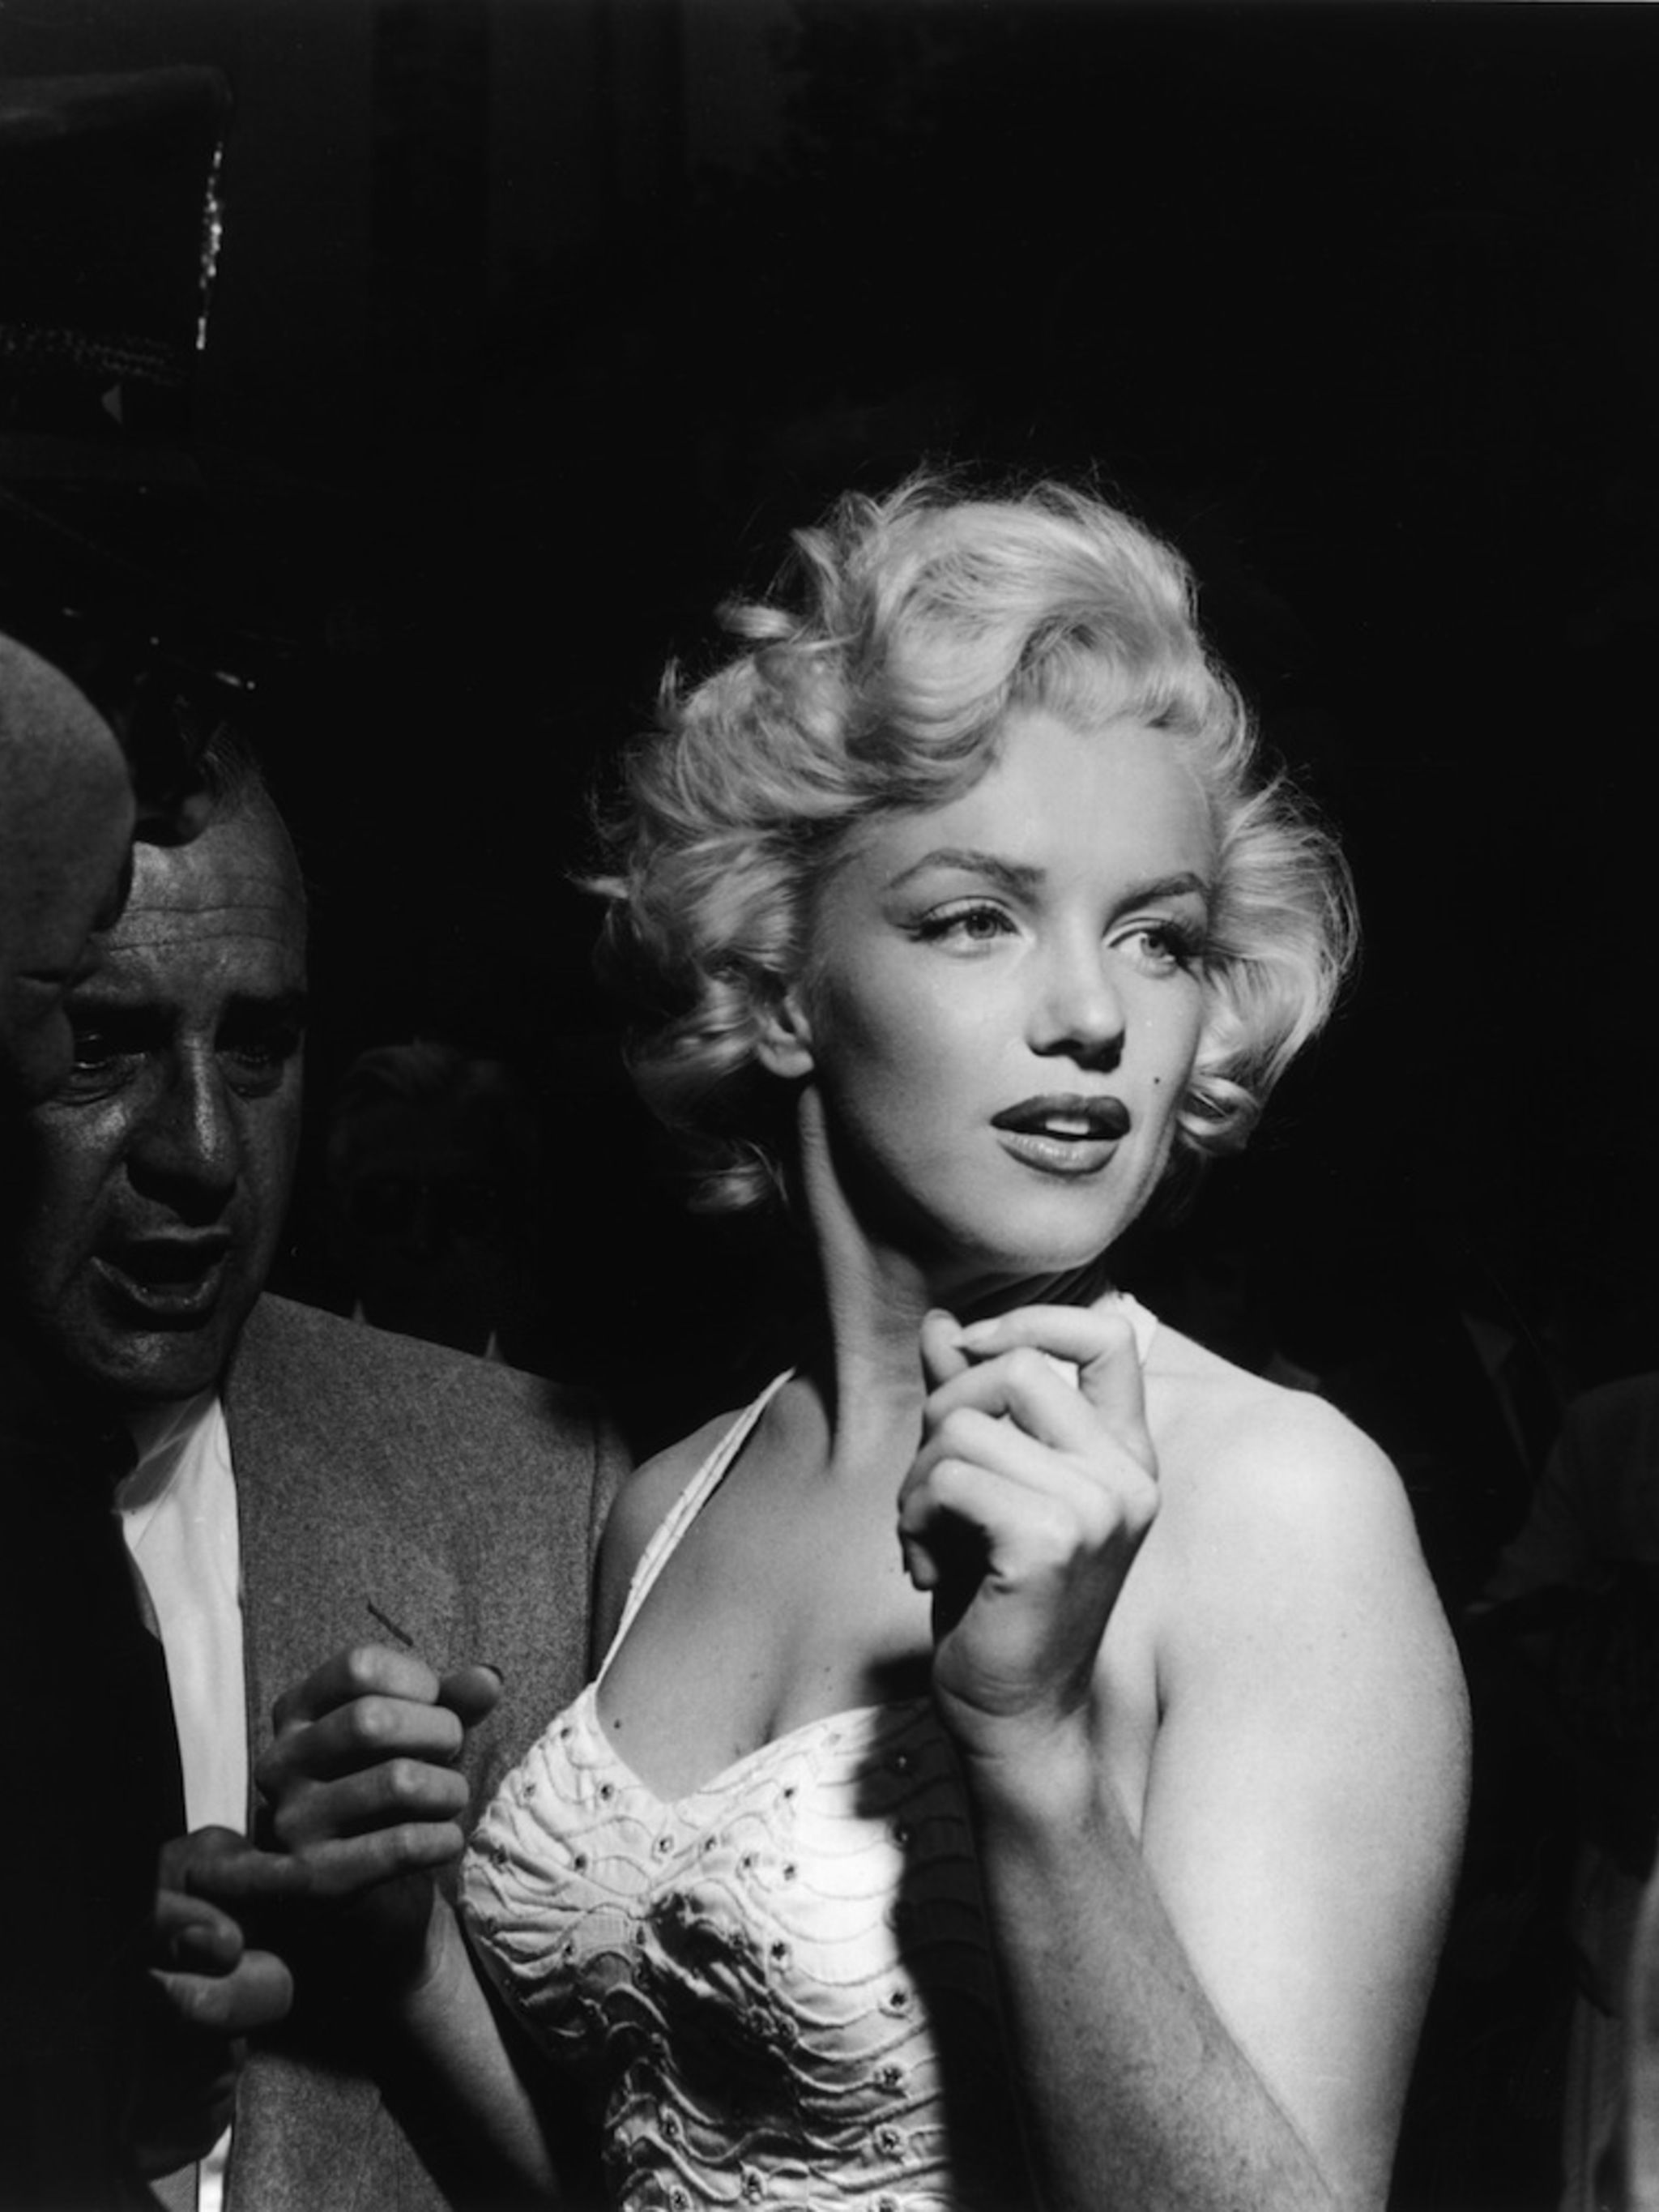 EYNTK About Marilyn Monroe Film 'Blonde' Starring Ana De Armas